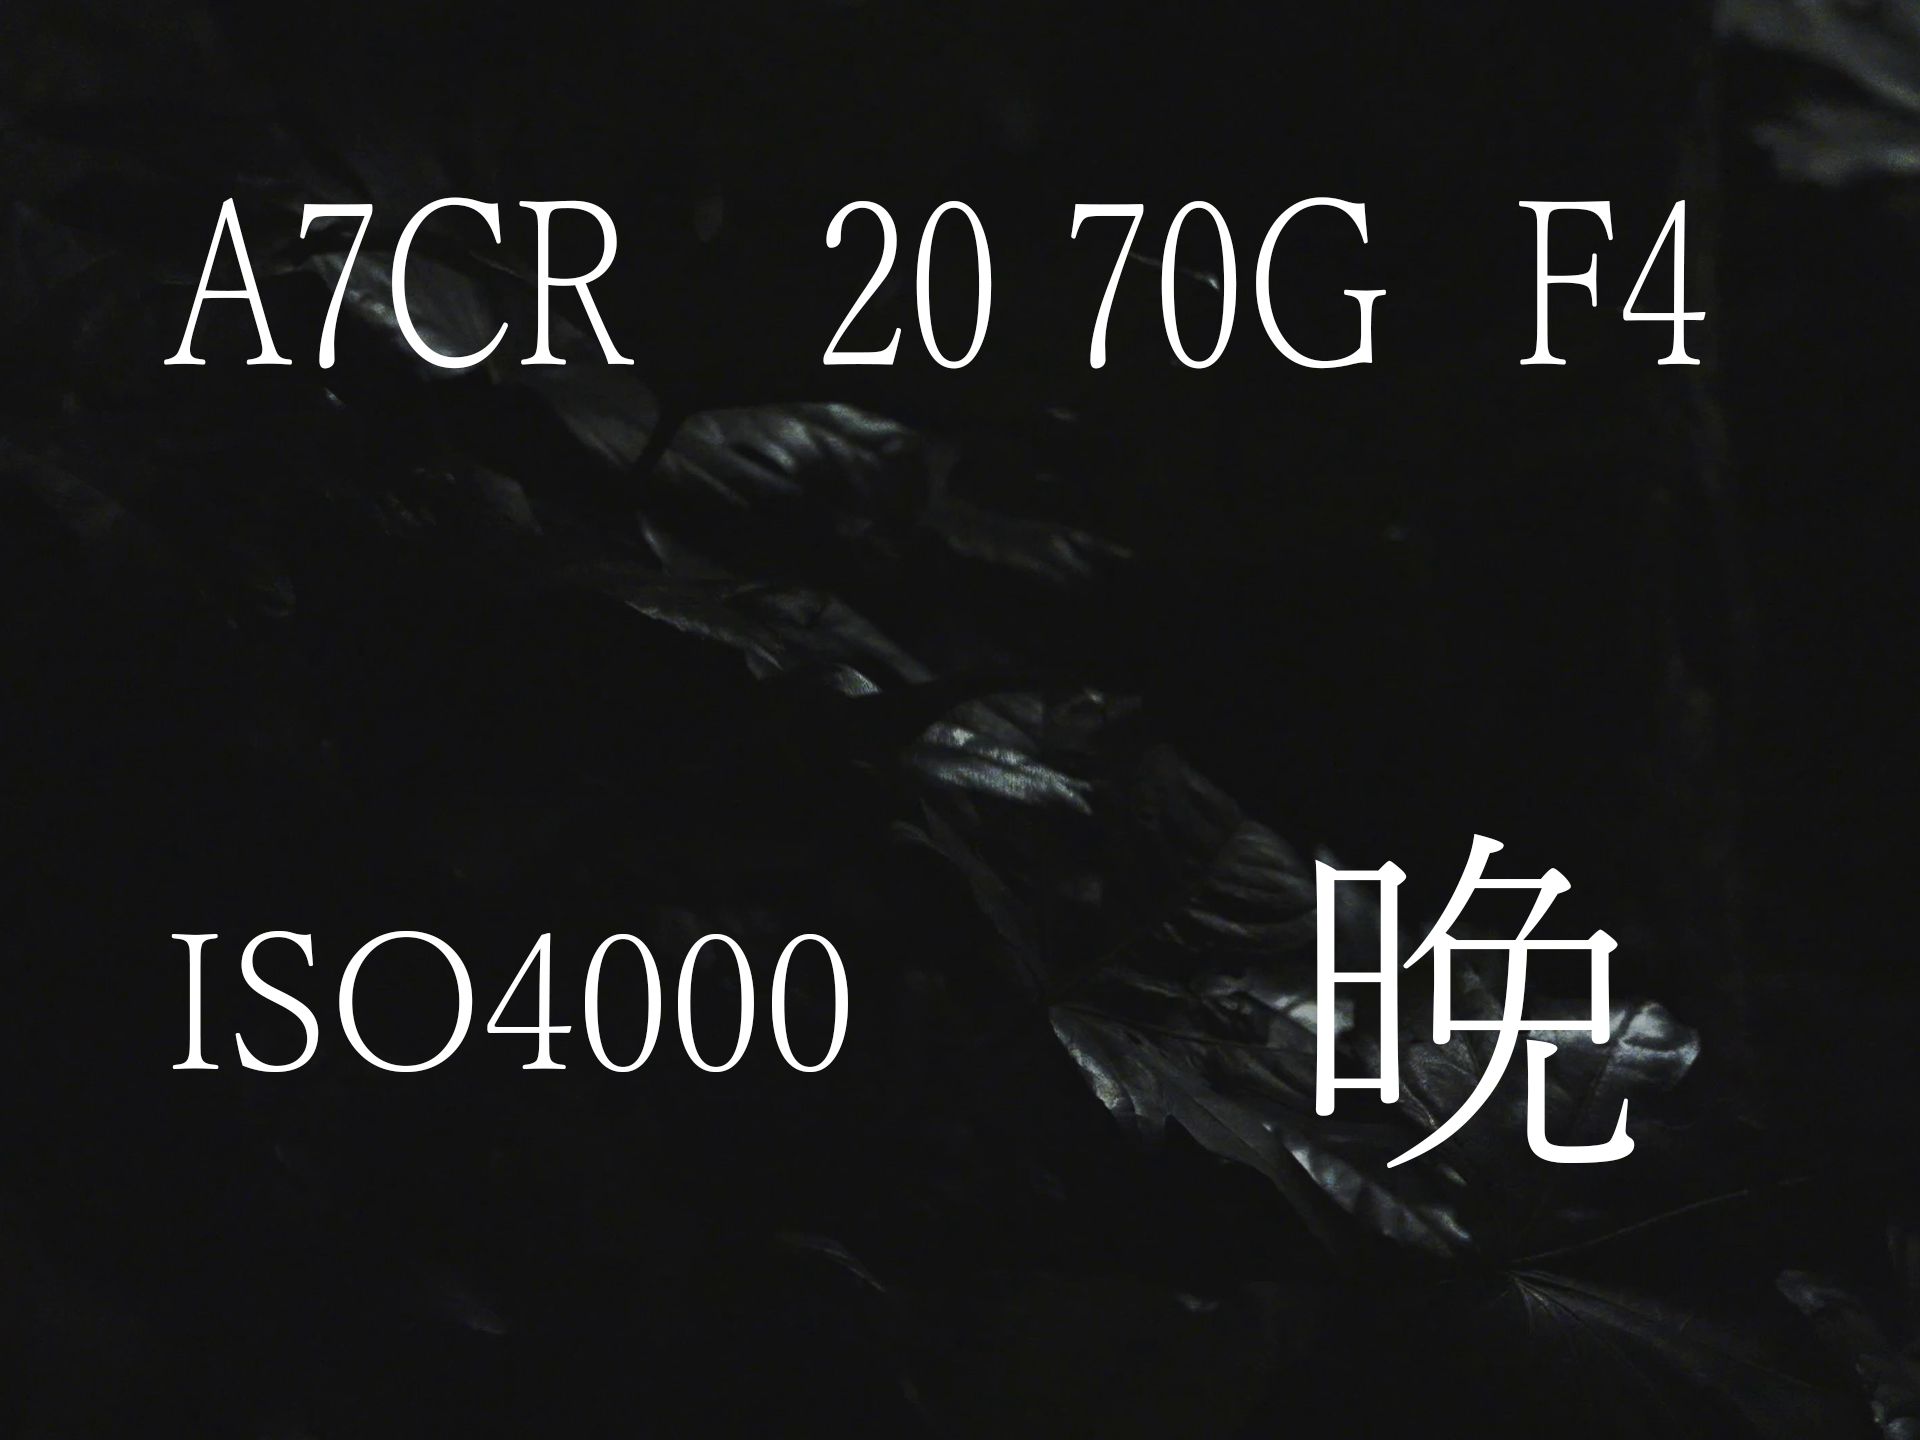 F4光圈的夜晚如何？索尼A7CR 2070G夜间实拍